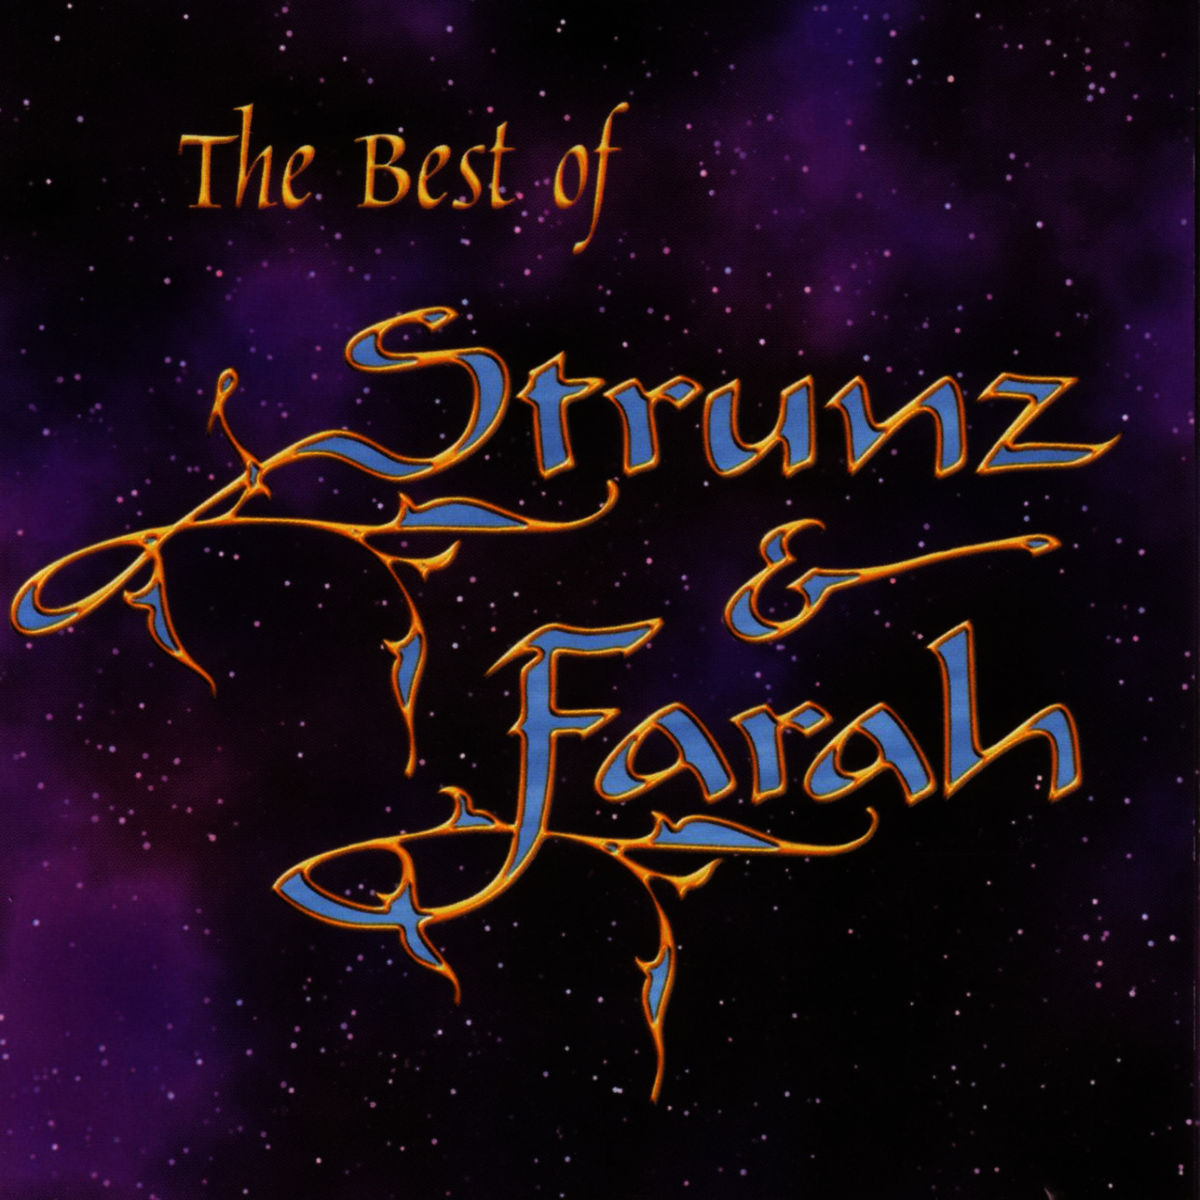 Strunz & Farah – 17 albums